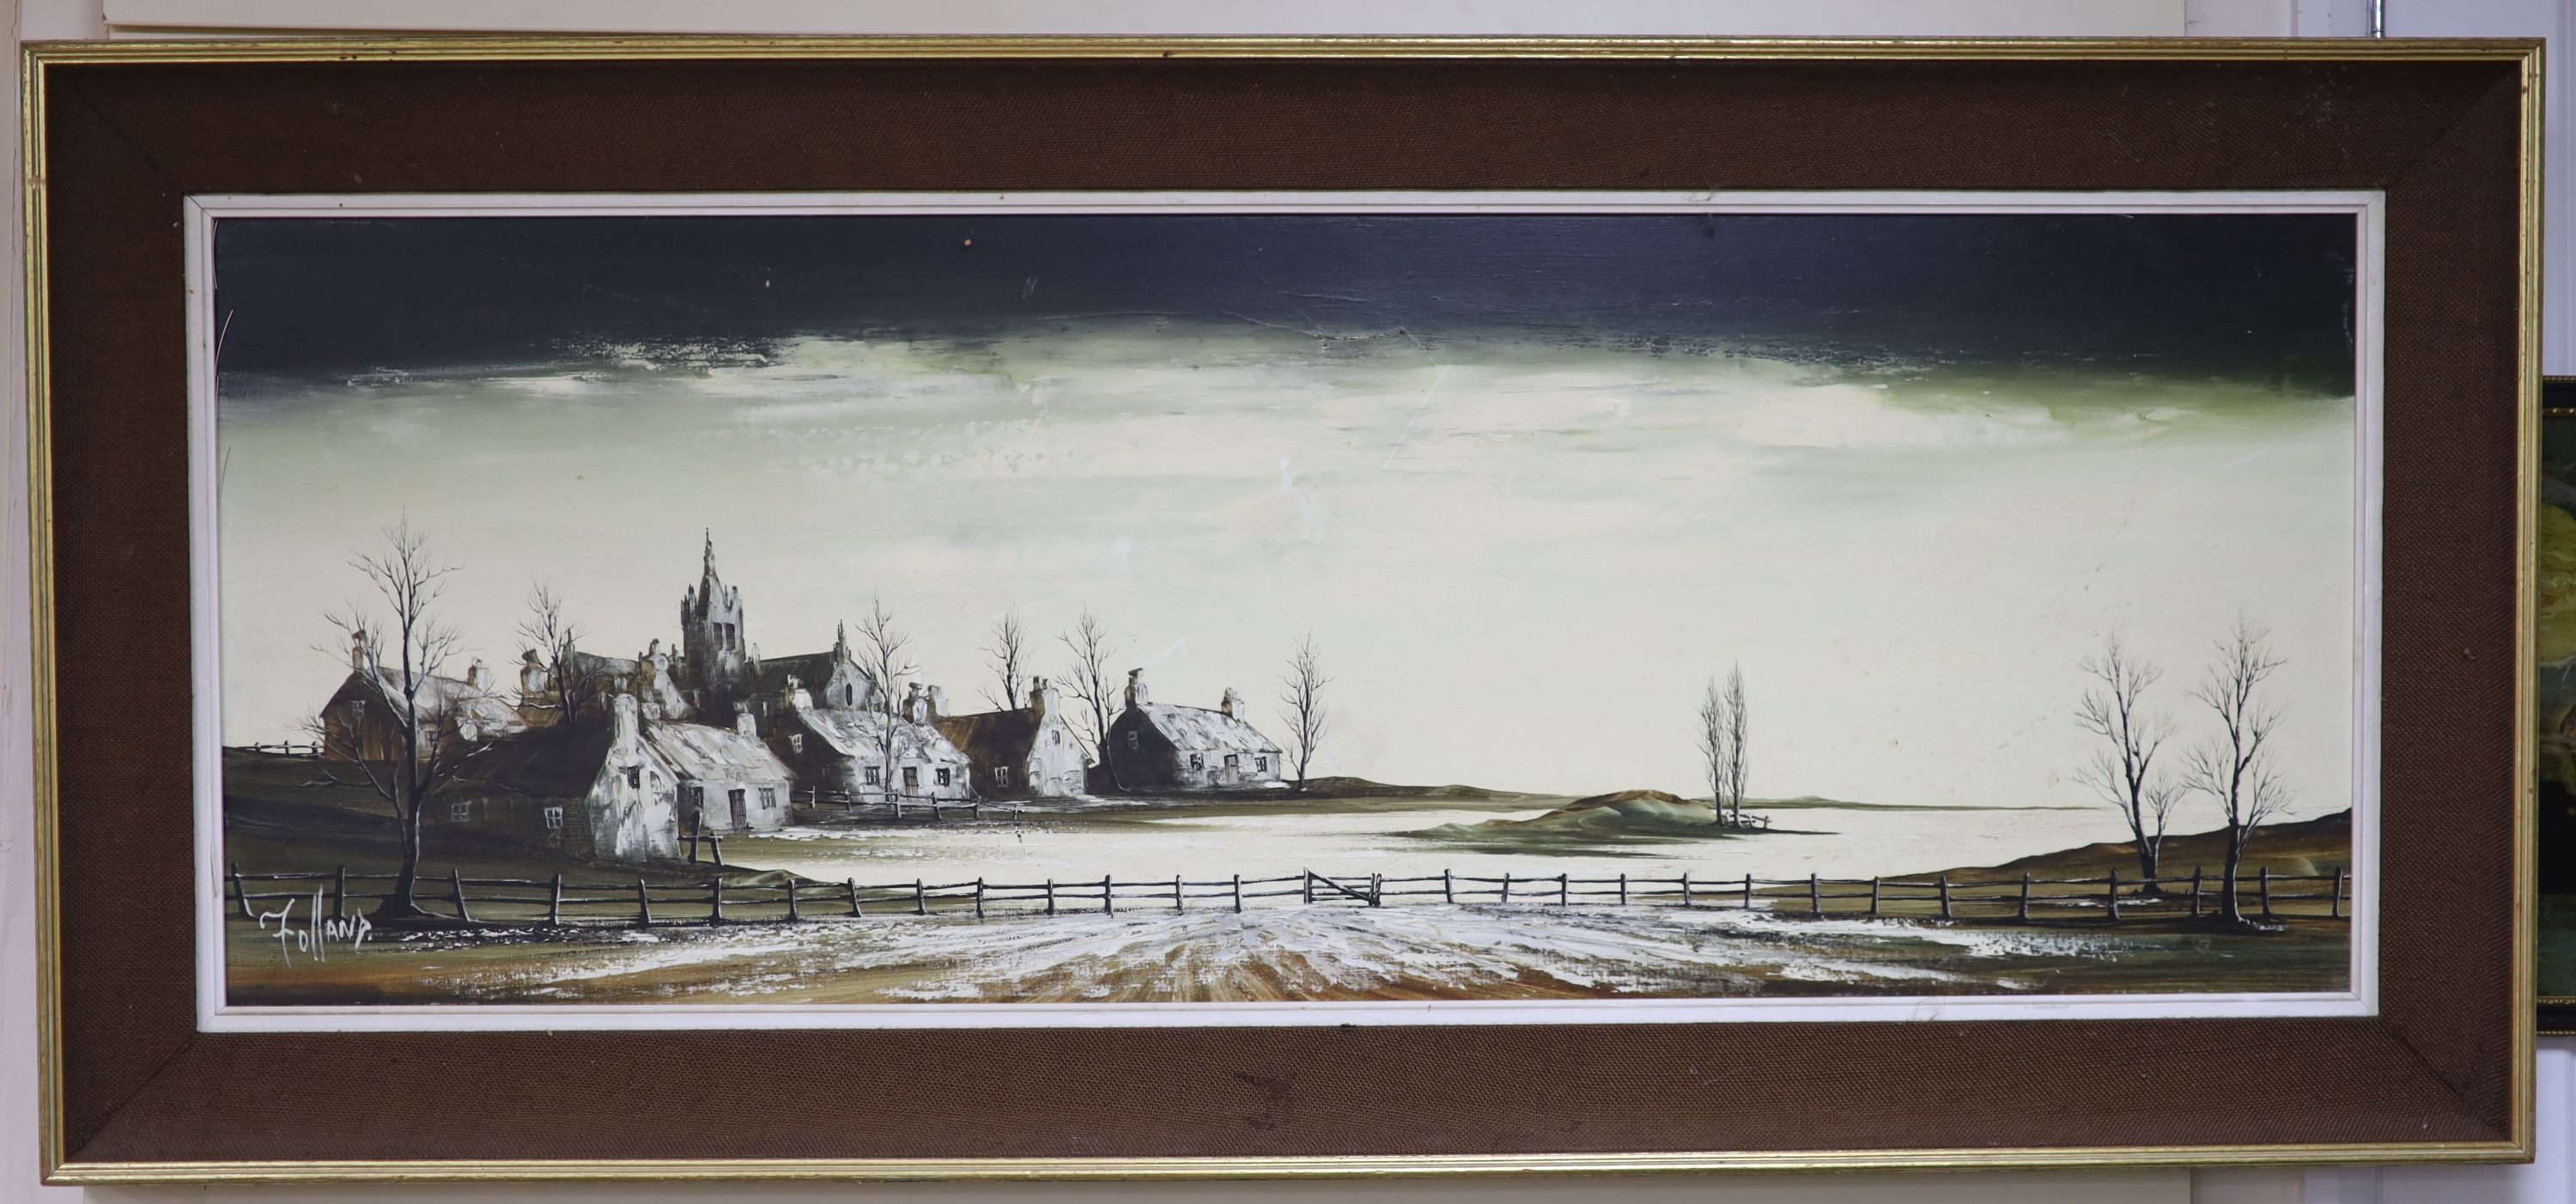 Ronald Norman Folland (1932-1999), oil on canvas, Winter landscape, signed, 44 x 120cm